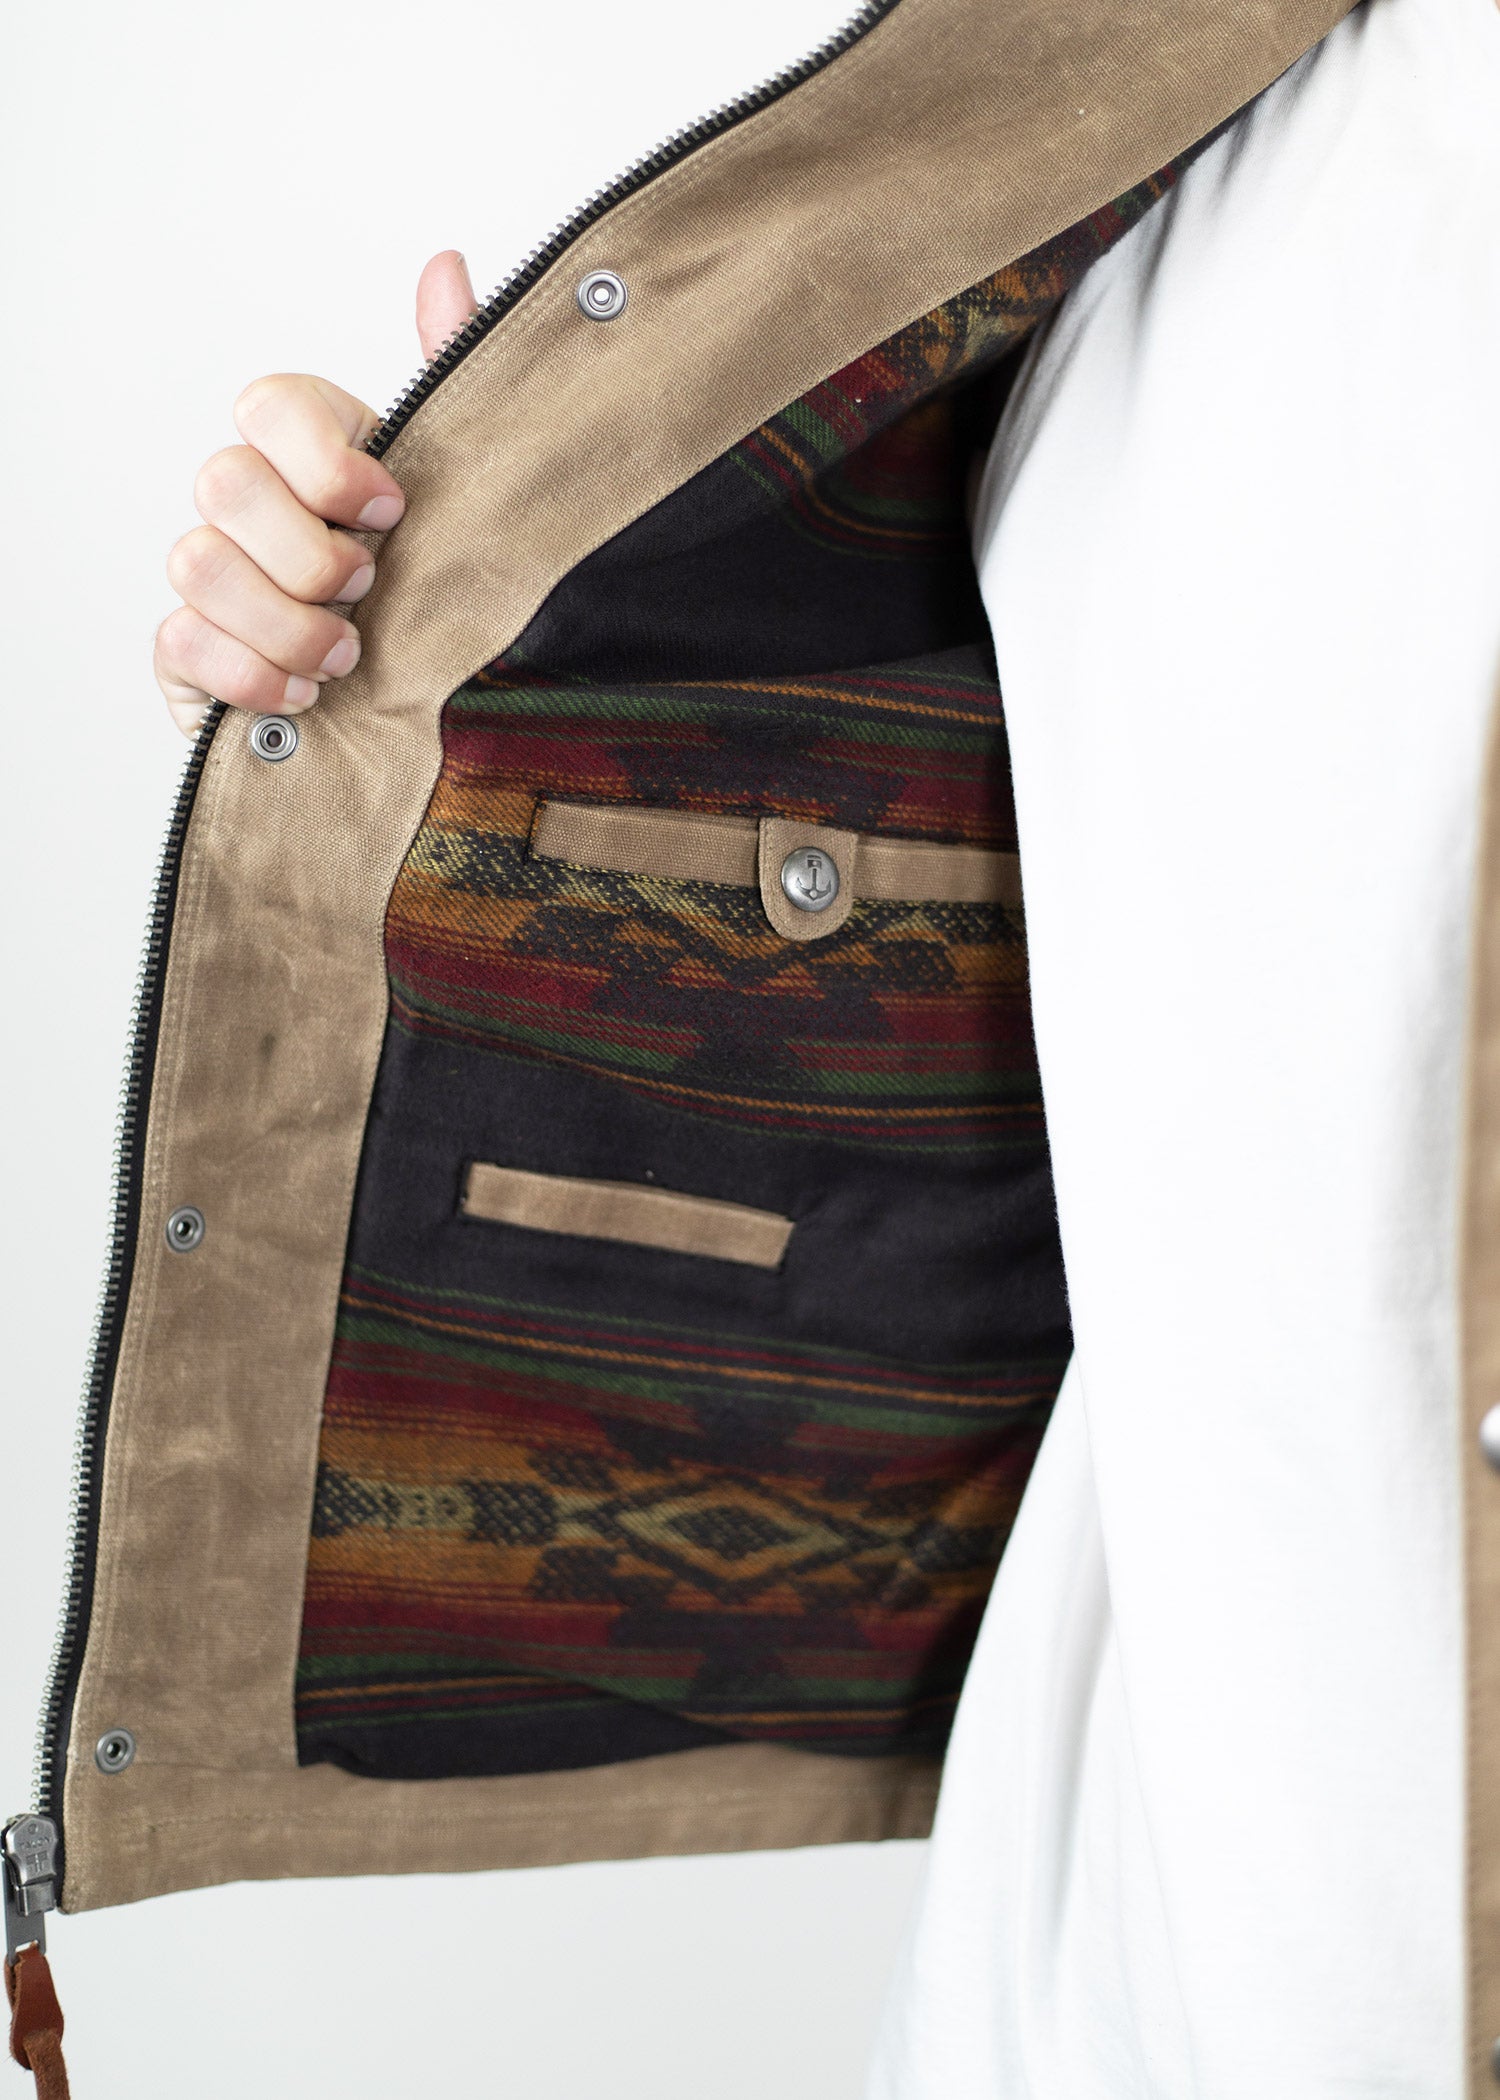 Hermès pre-owned Aline Shoulder Bag - Farfetch